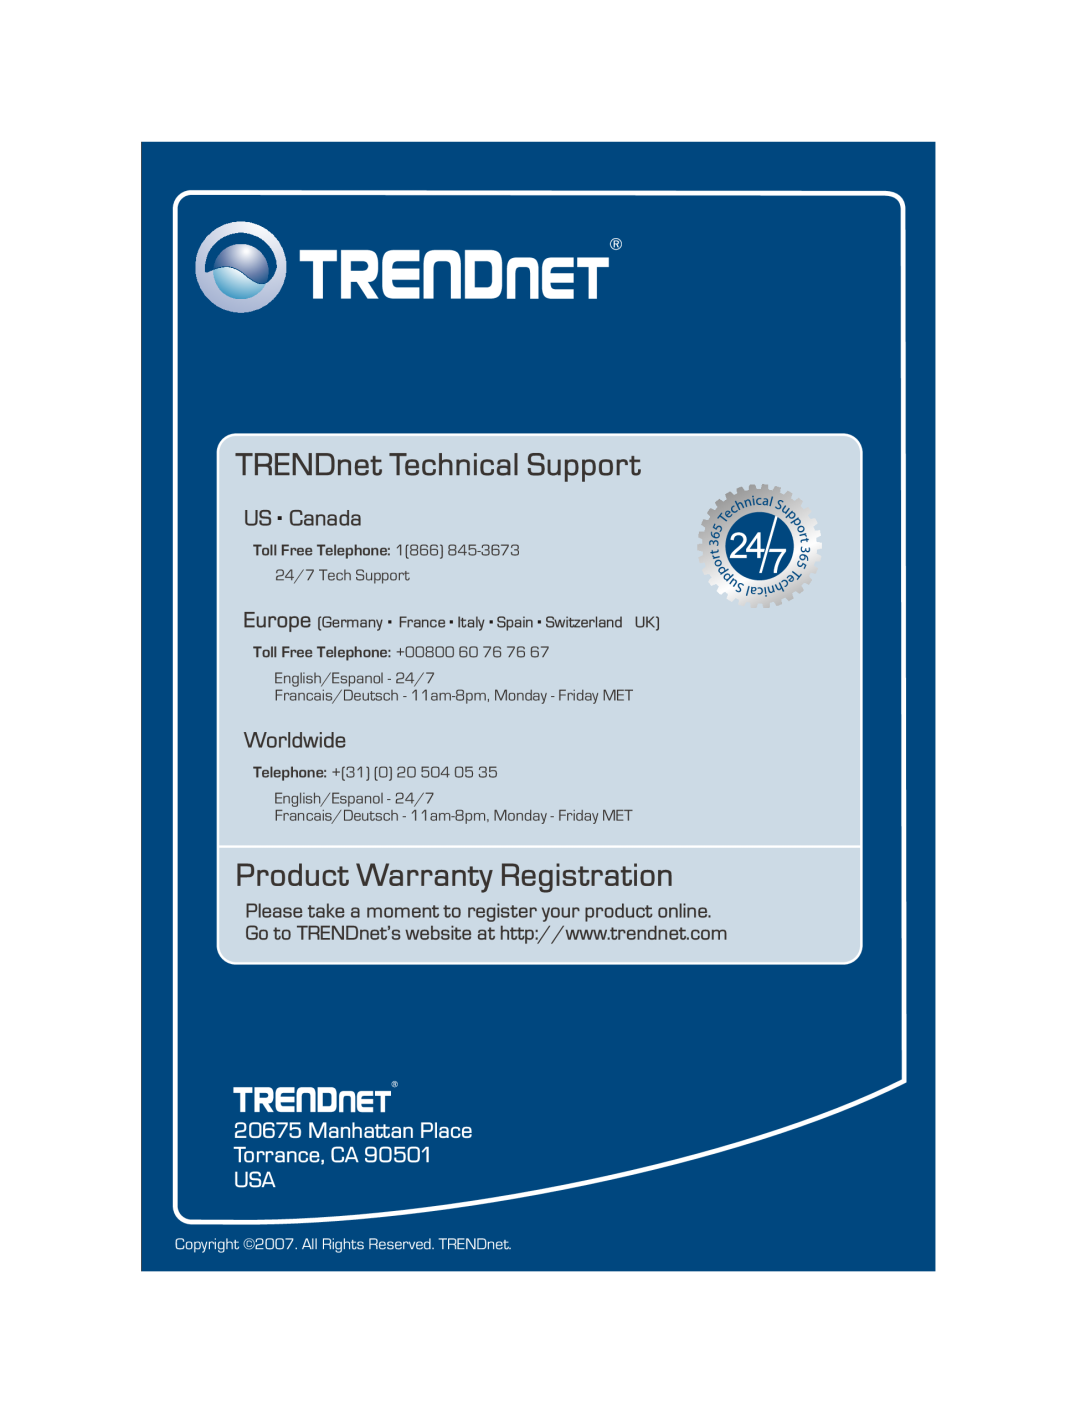 TRENDnet TU-S9 Manhattan Place Torrance, CA USA, TRENDnet Technical Support, Product Warranty Registration, US . Canada 